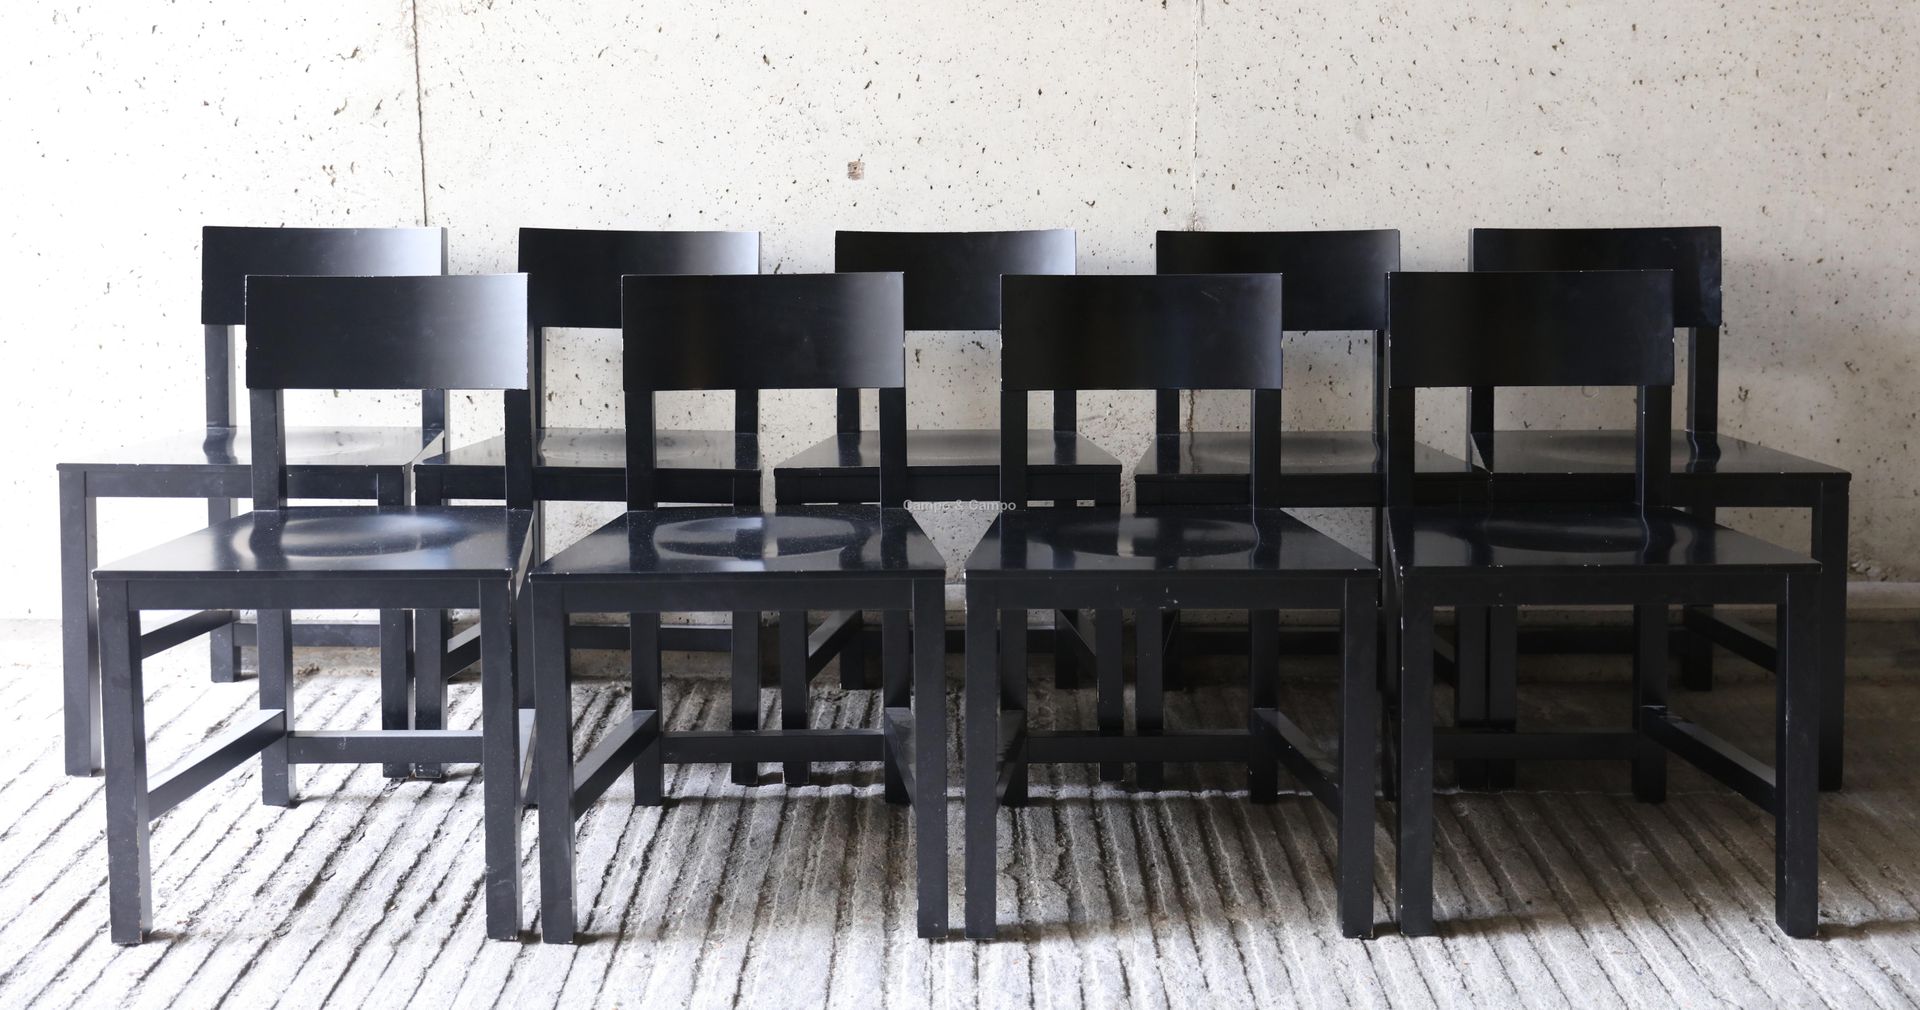 VARIA Neuf chaises shaker en laque noire par Atelier Van Lieshout
Negen shaker s&hellip;